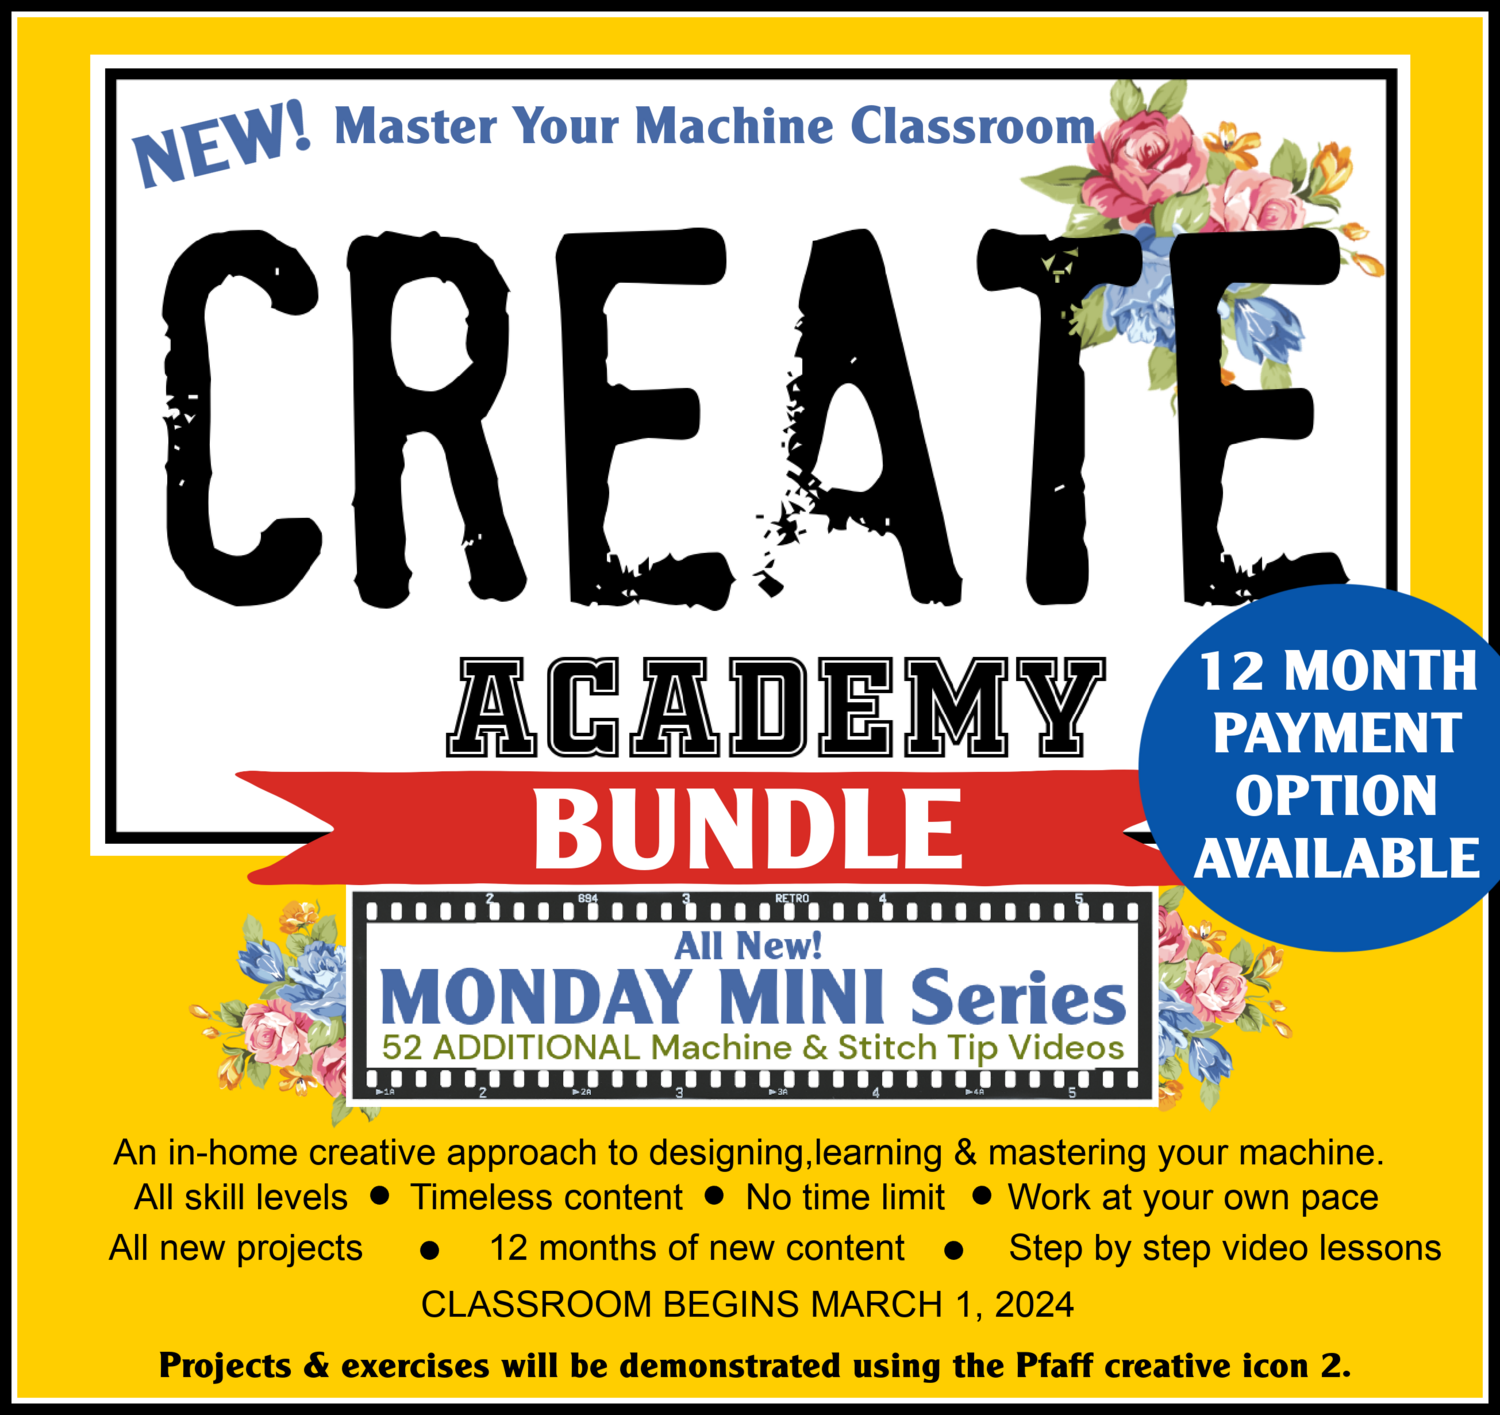 CREATE Academy/Monday Mini BUNDLE